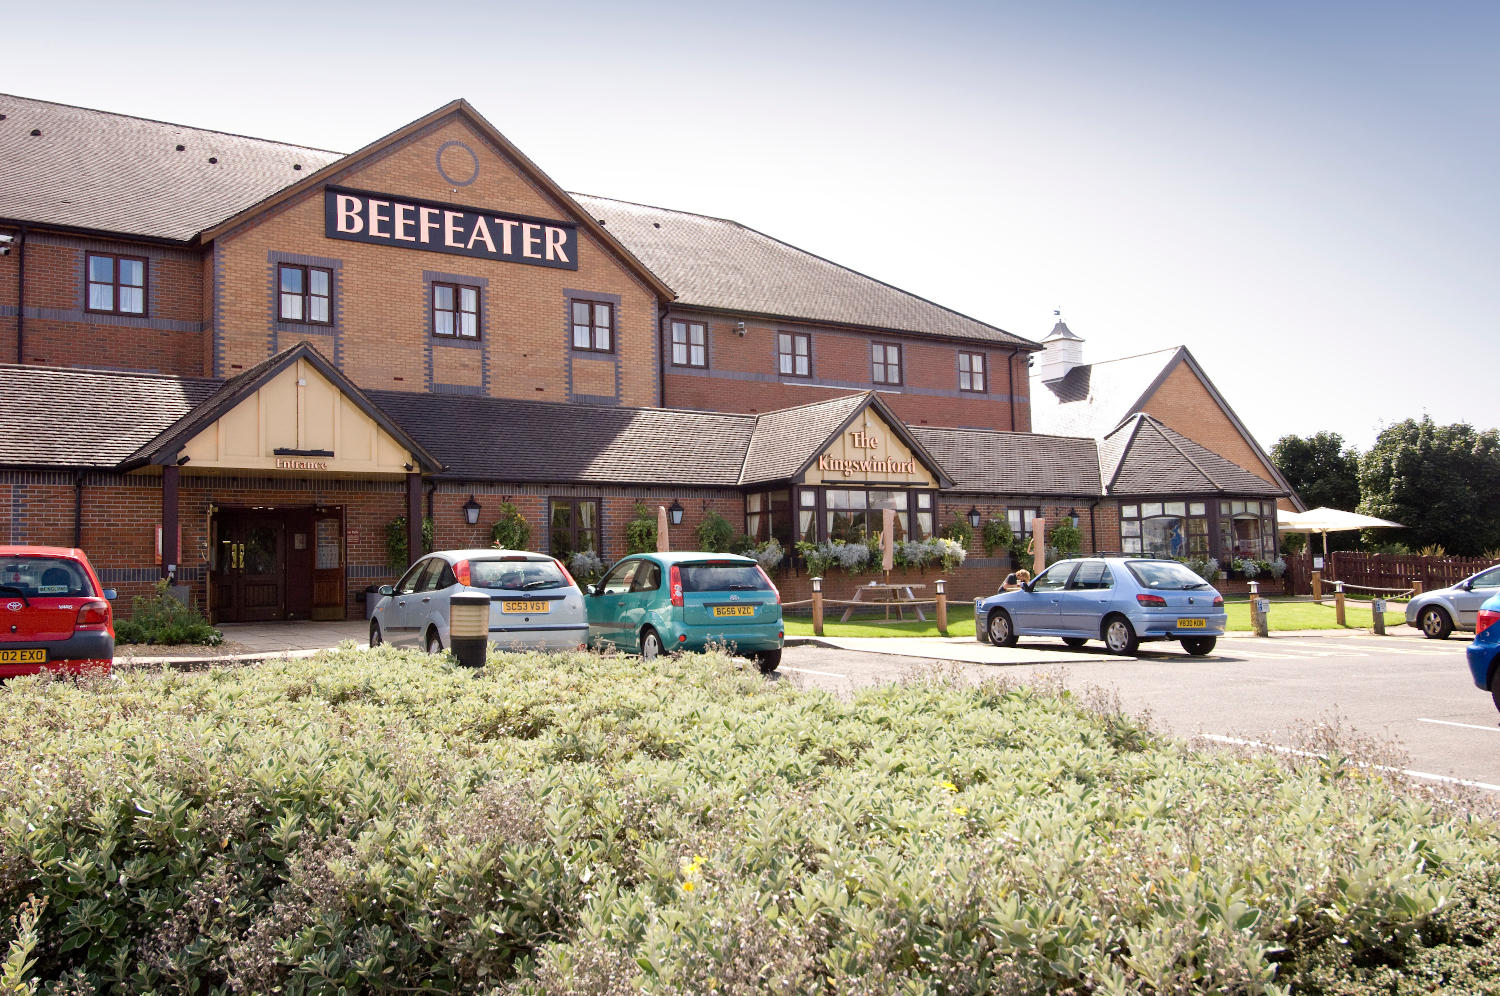 Beefeater restaurant Premier Inn Dudley (Kingswinford) hotel Kingswinford 03337 774653